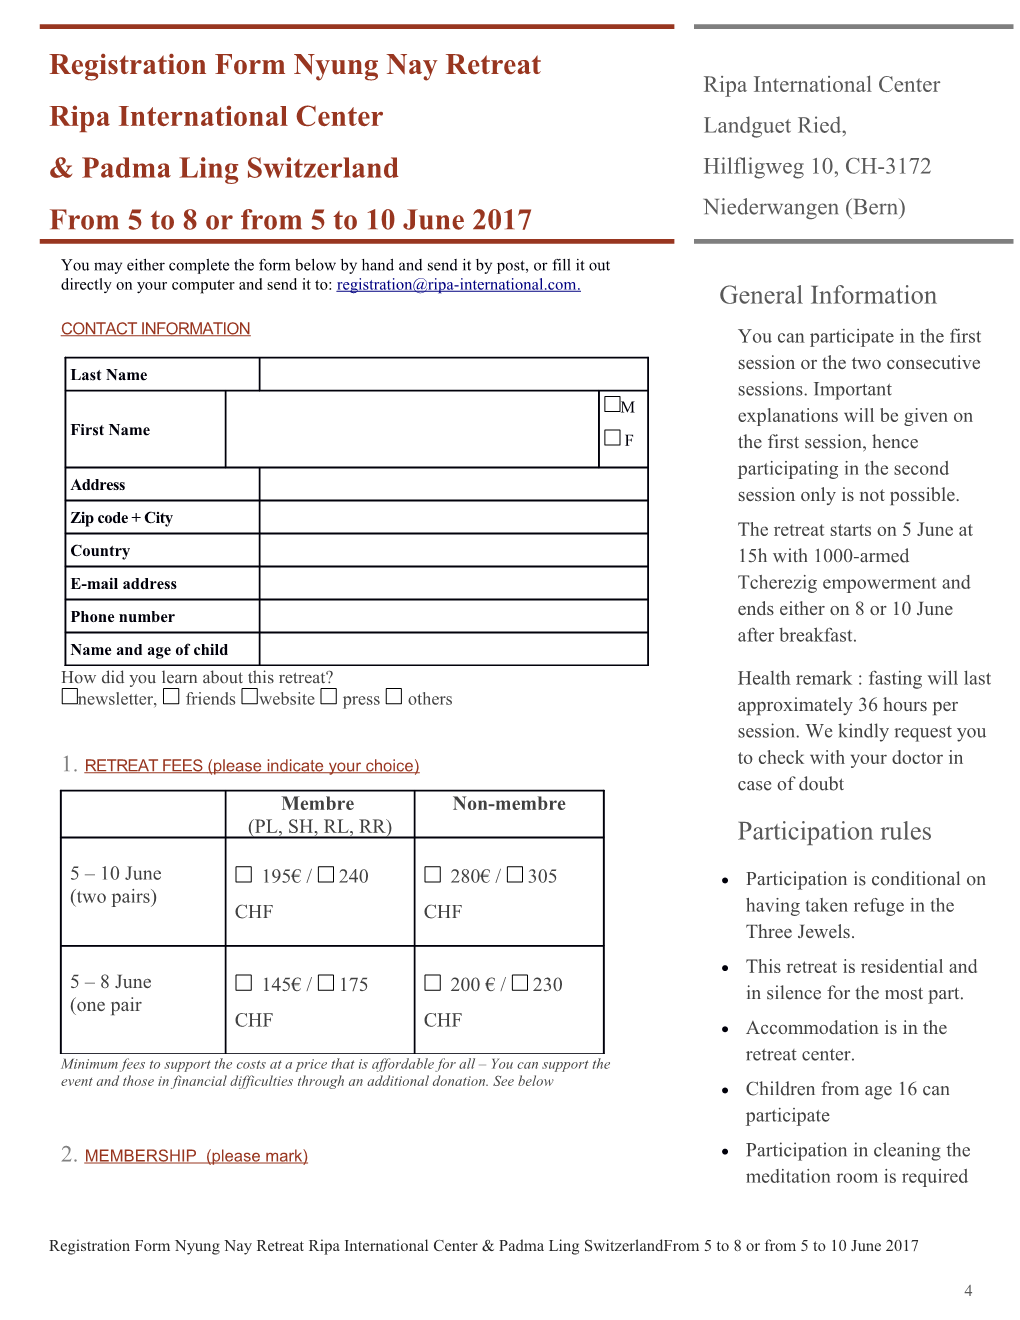 Registration Form Nyung Nay Retreat Ripa International Center & Padma Ling Switzerland